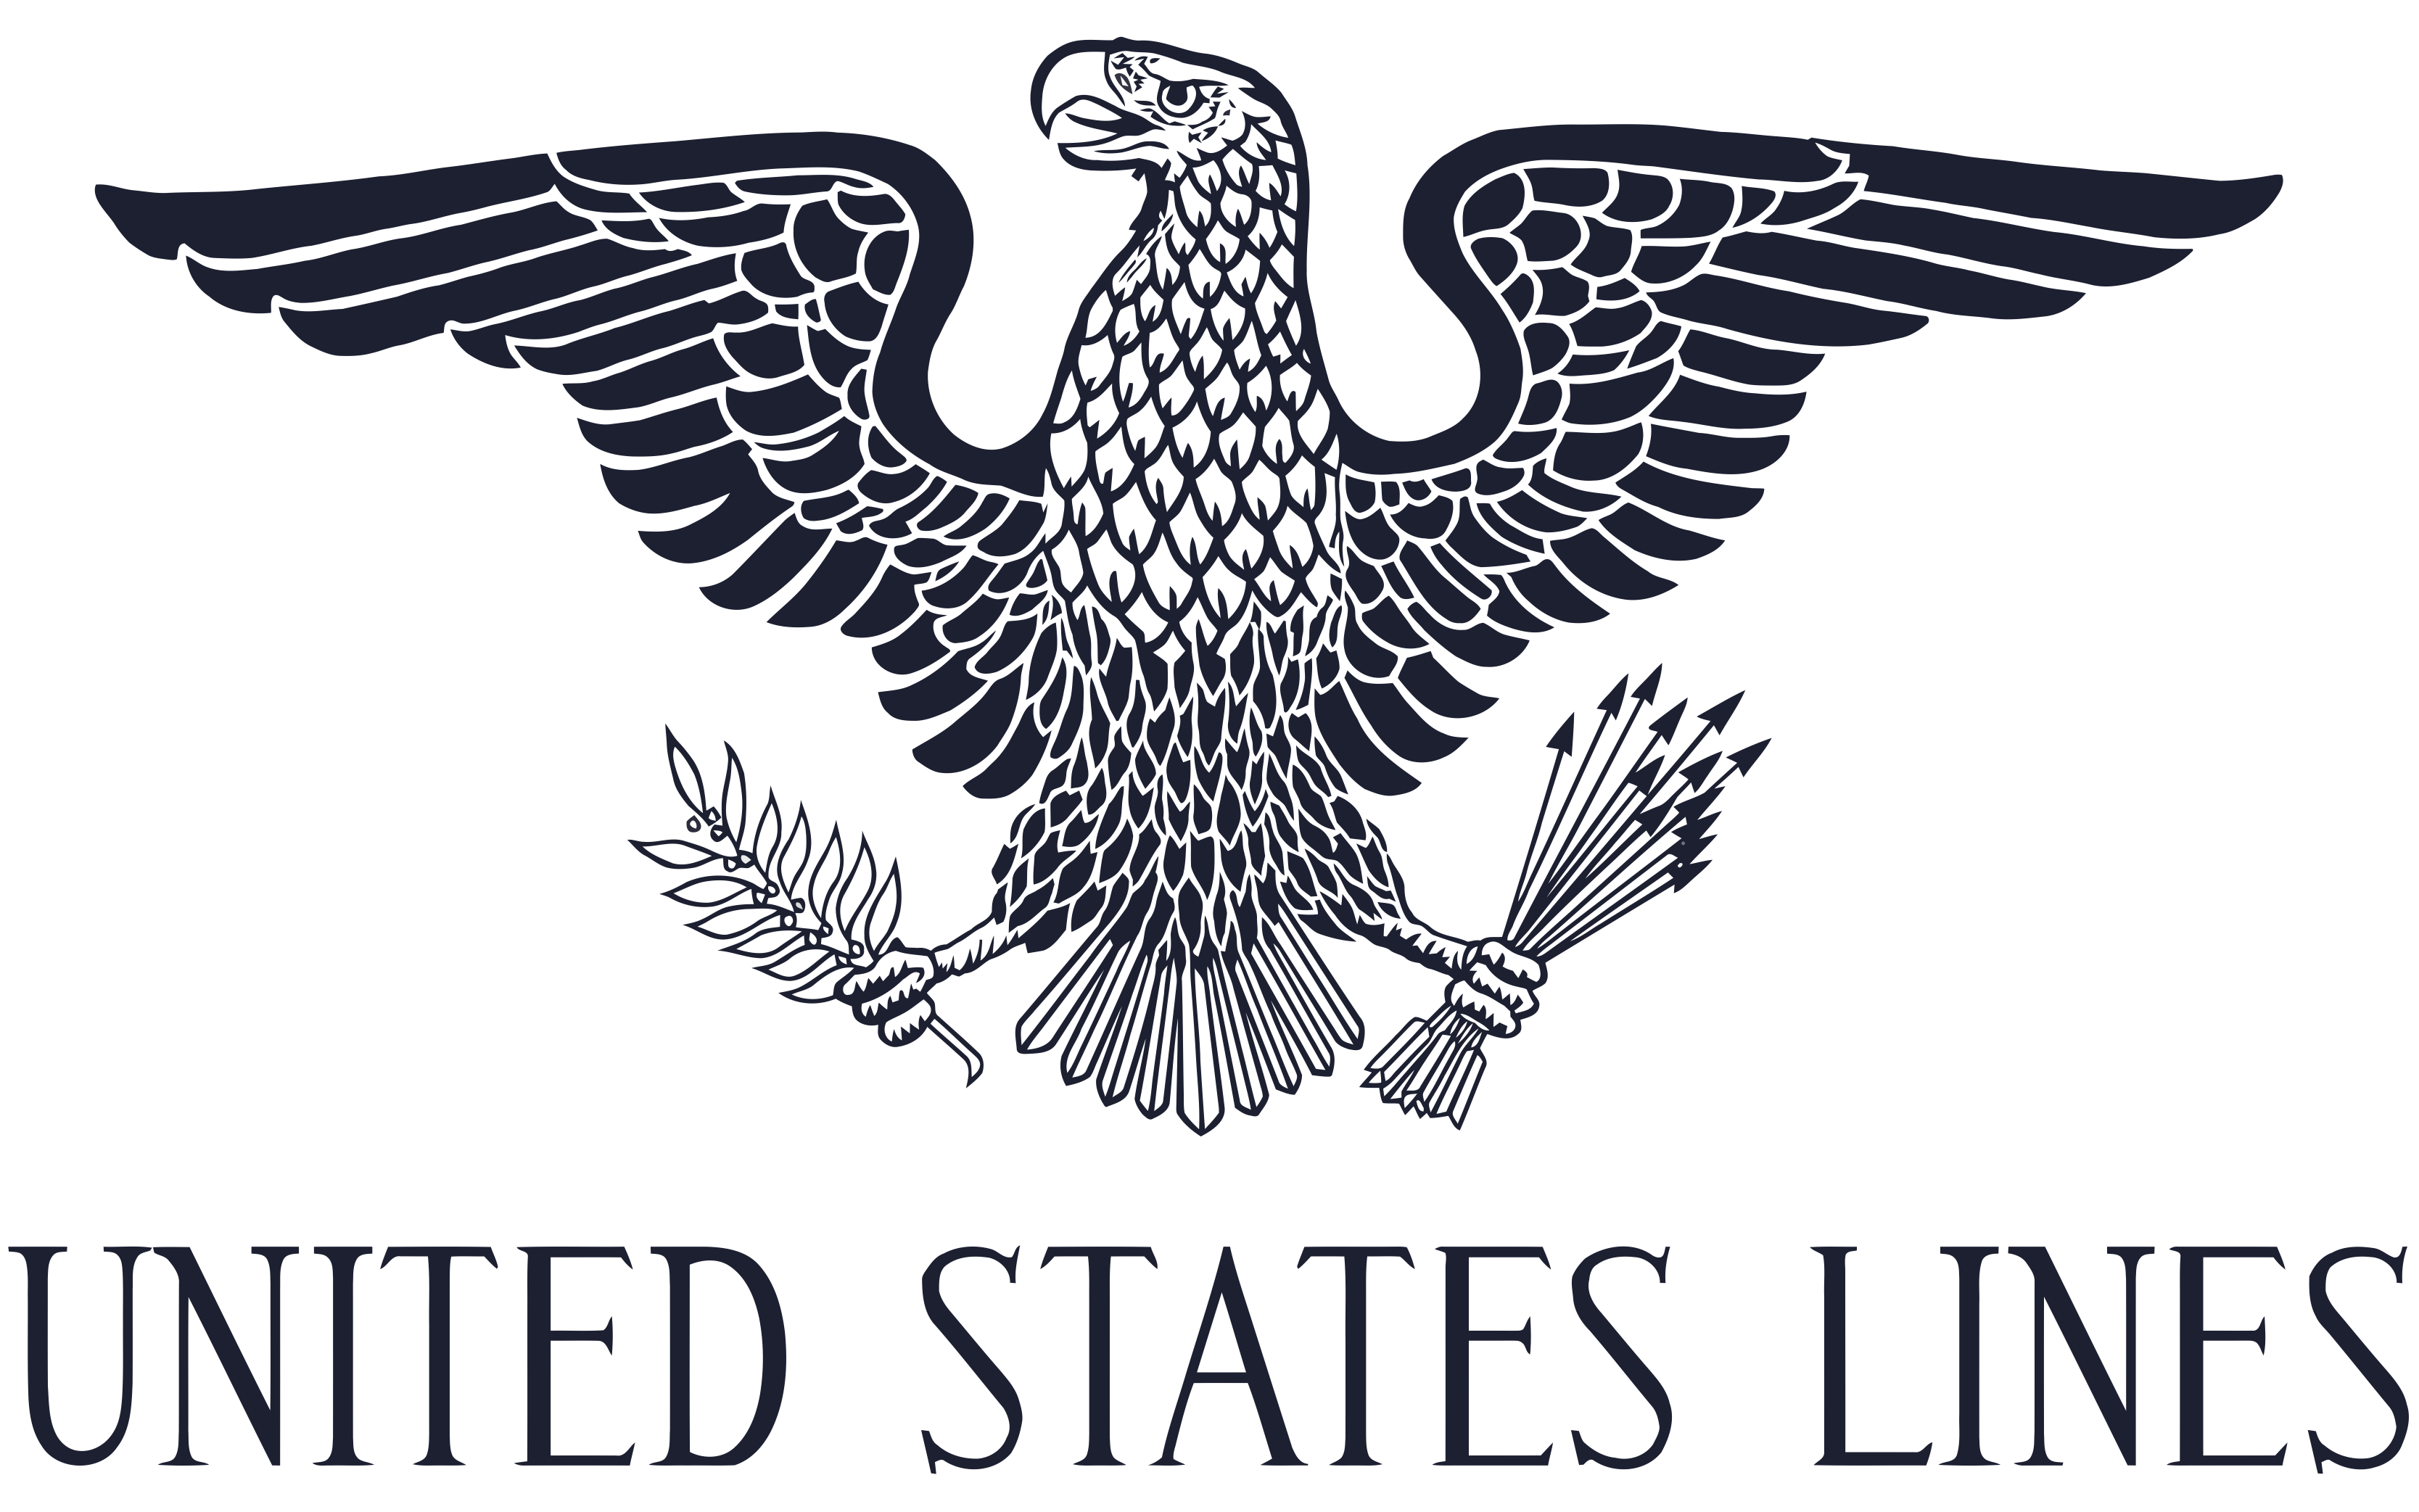 United States Eagle Logo - File:United States Lines Logo.png - Wikimedia Commons